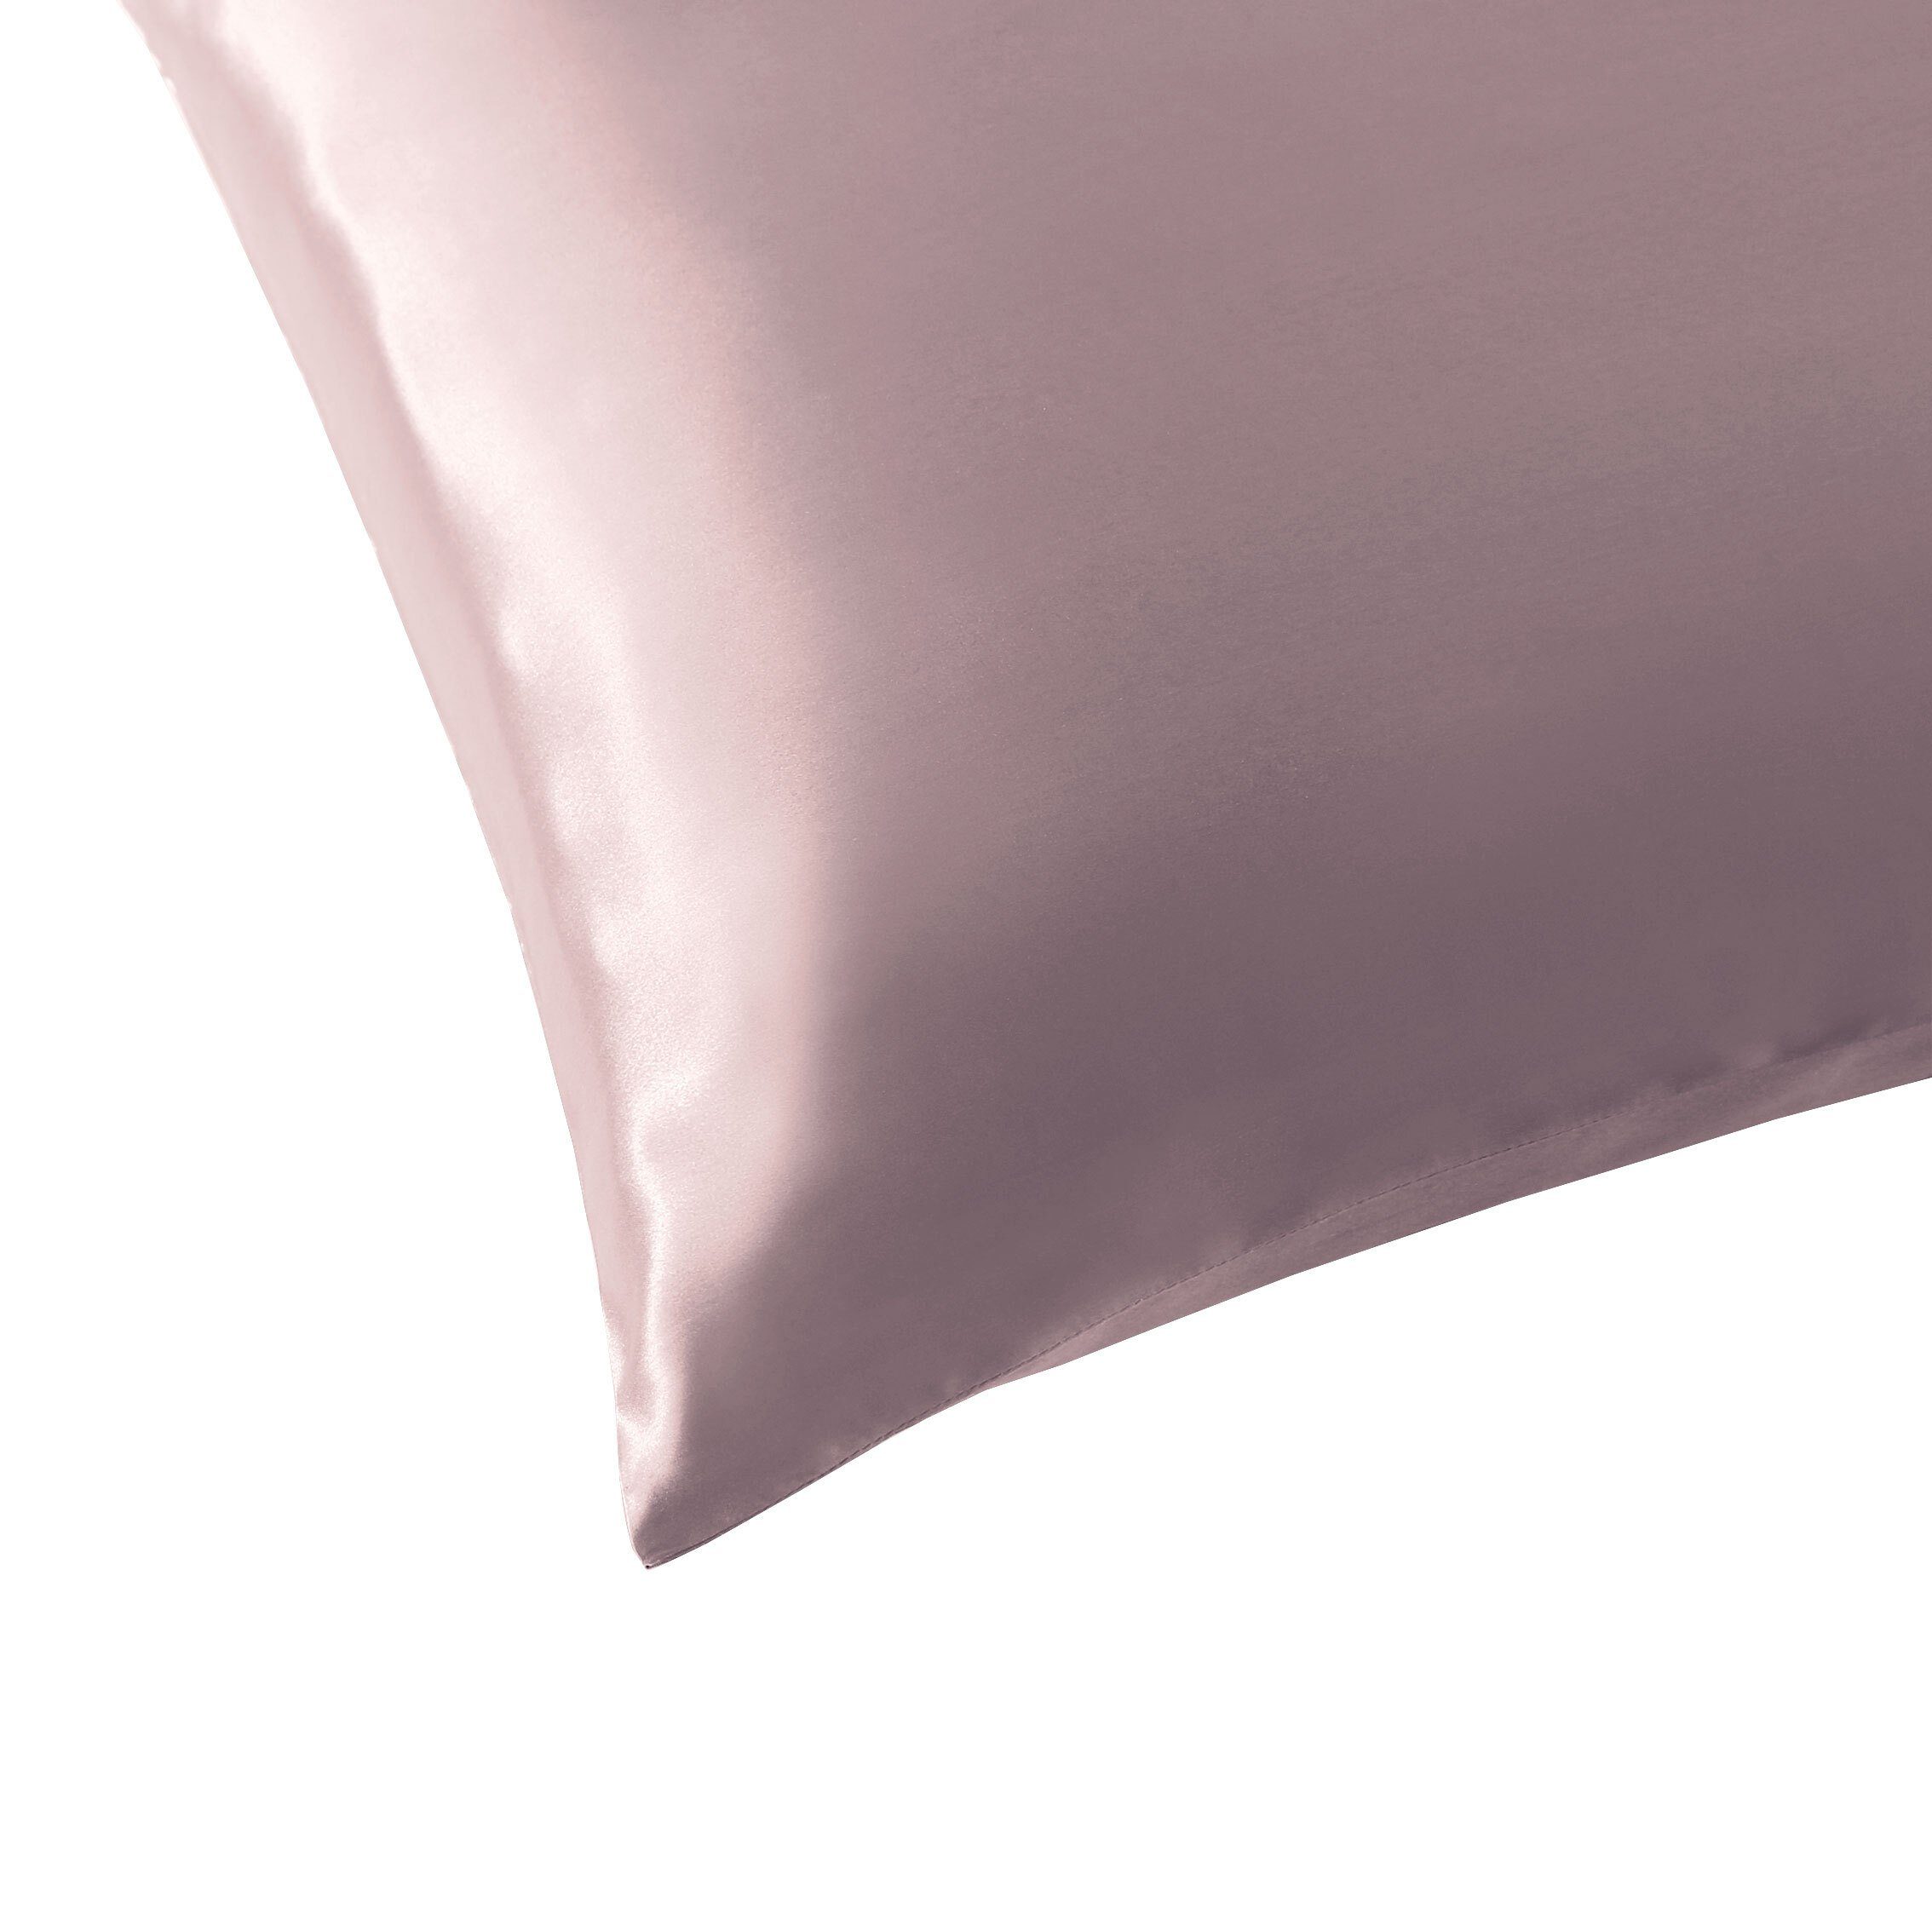 kopfkissenbezug SLEEP AILORIA (65X65) Kissenbezüge aus pink seide, BEAUTY